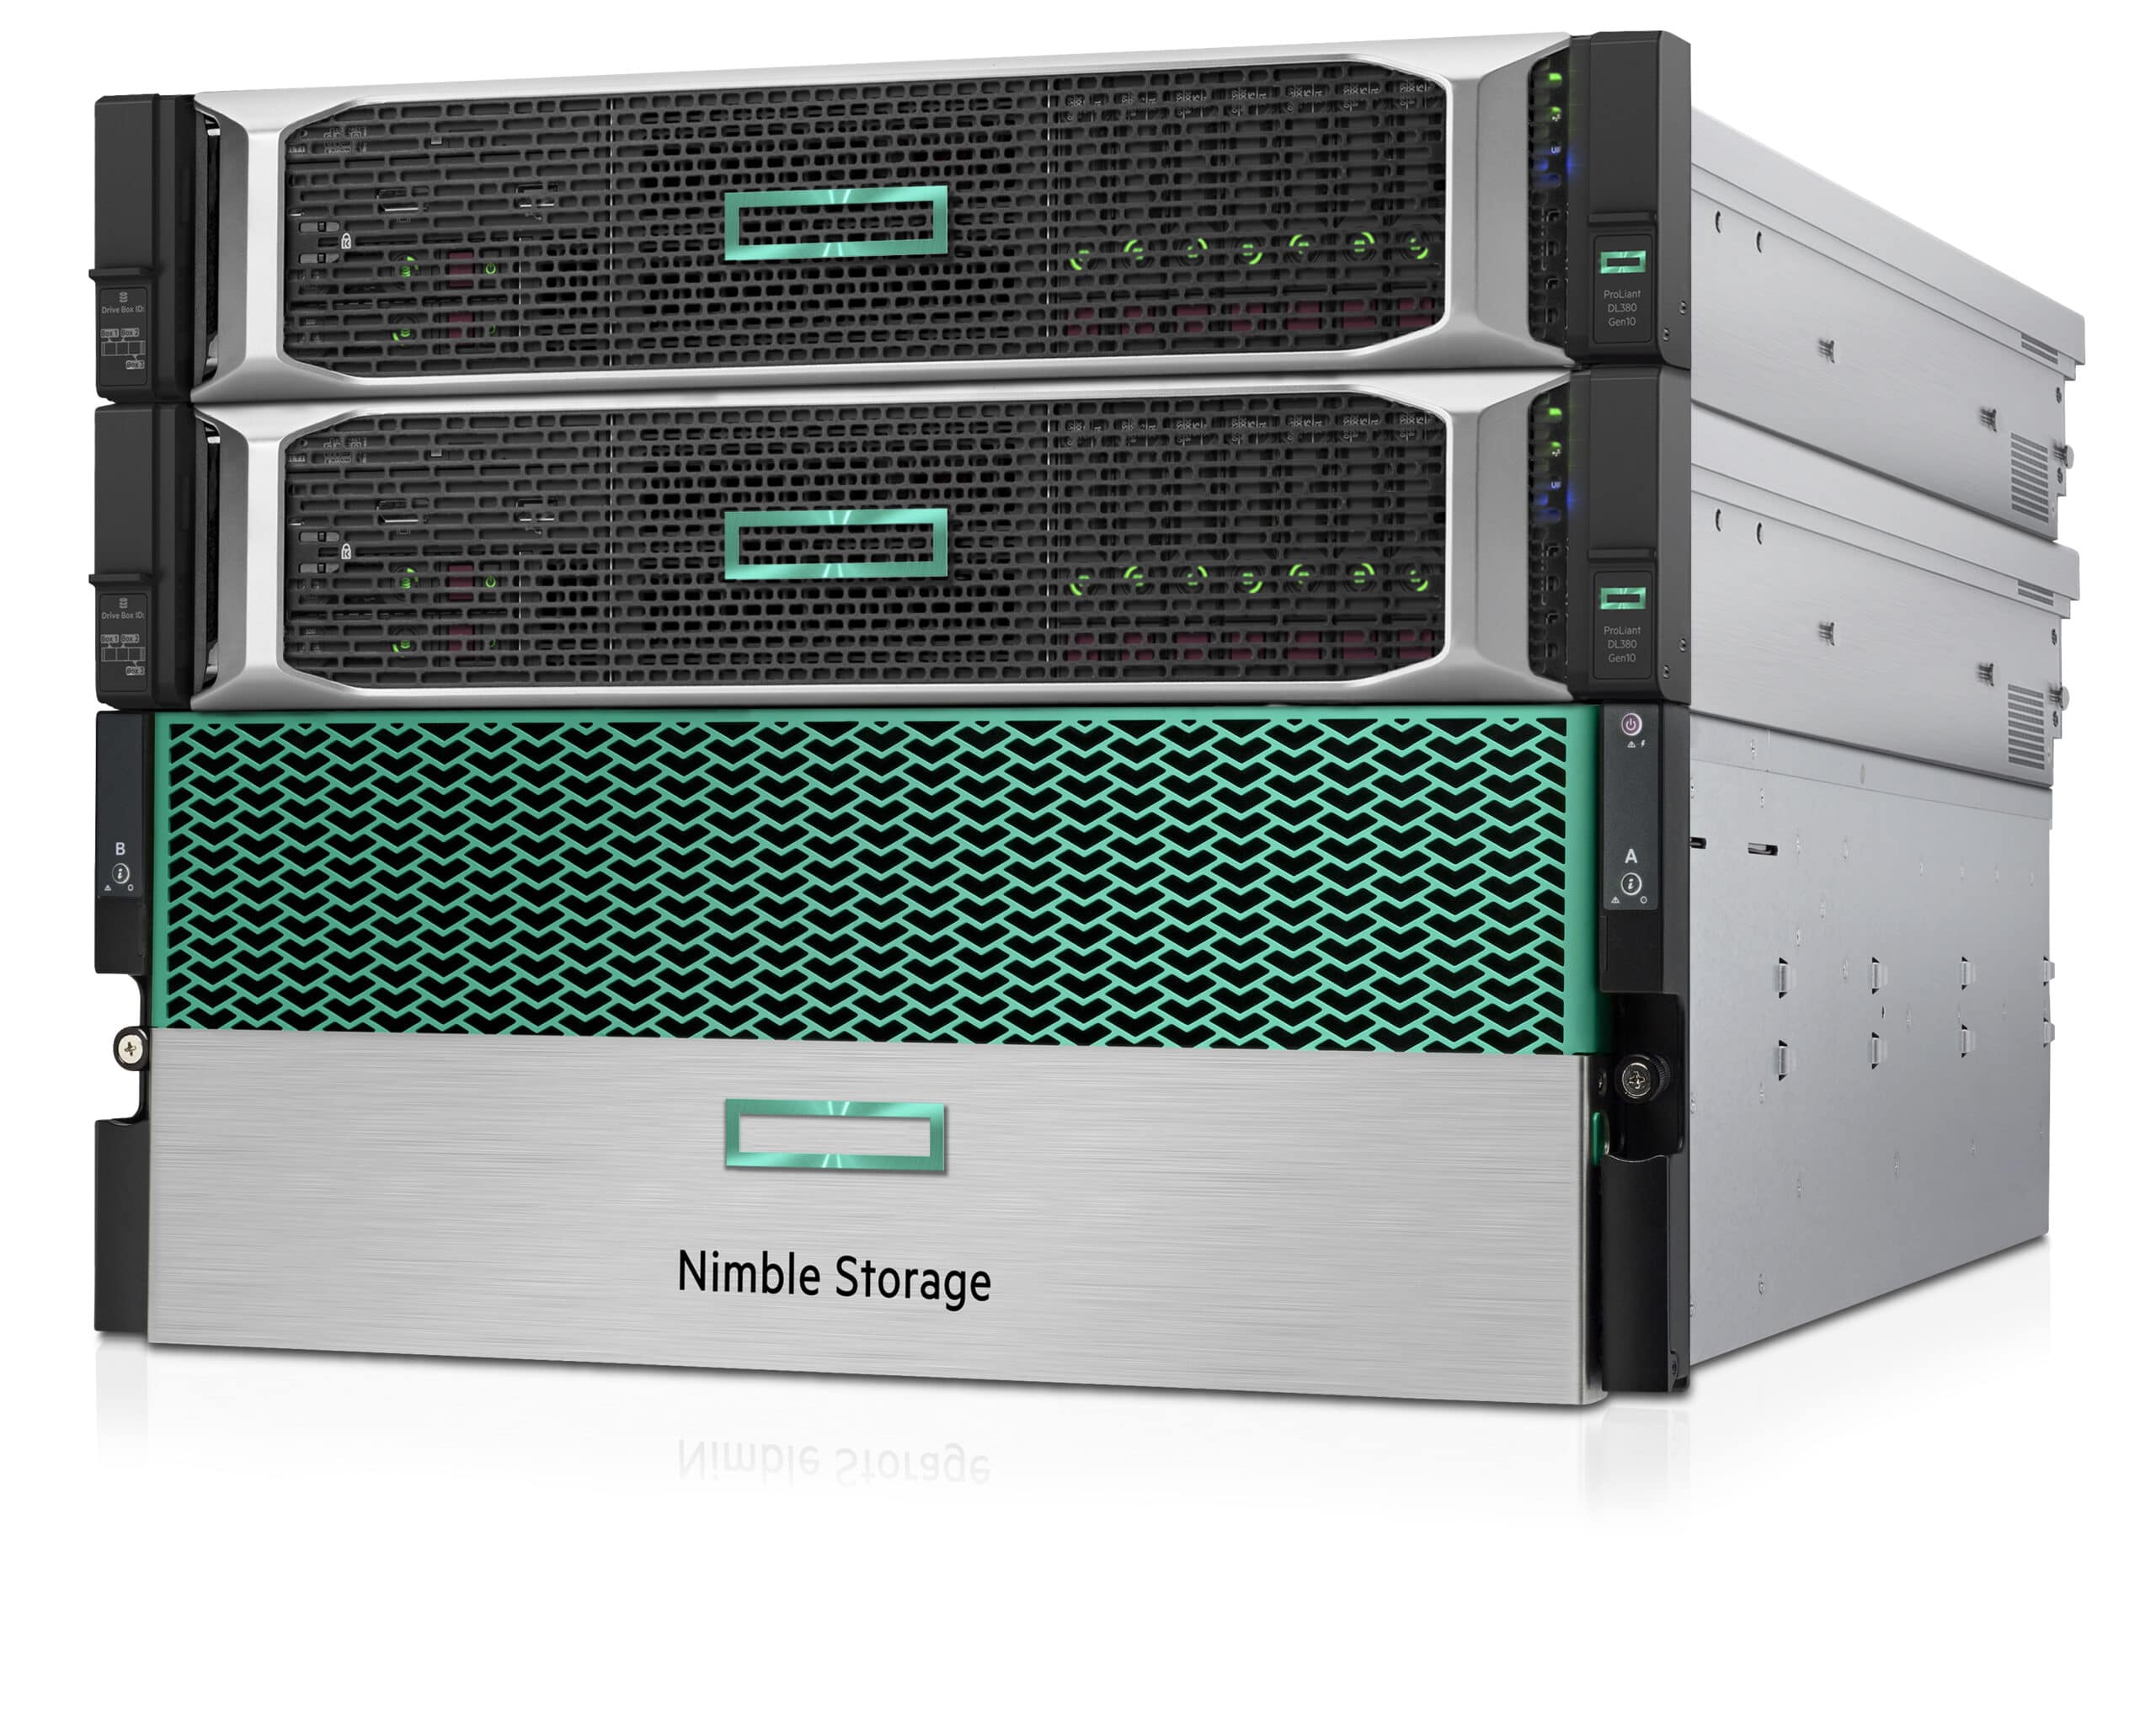 Nimble Storage shared storage